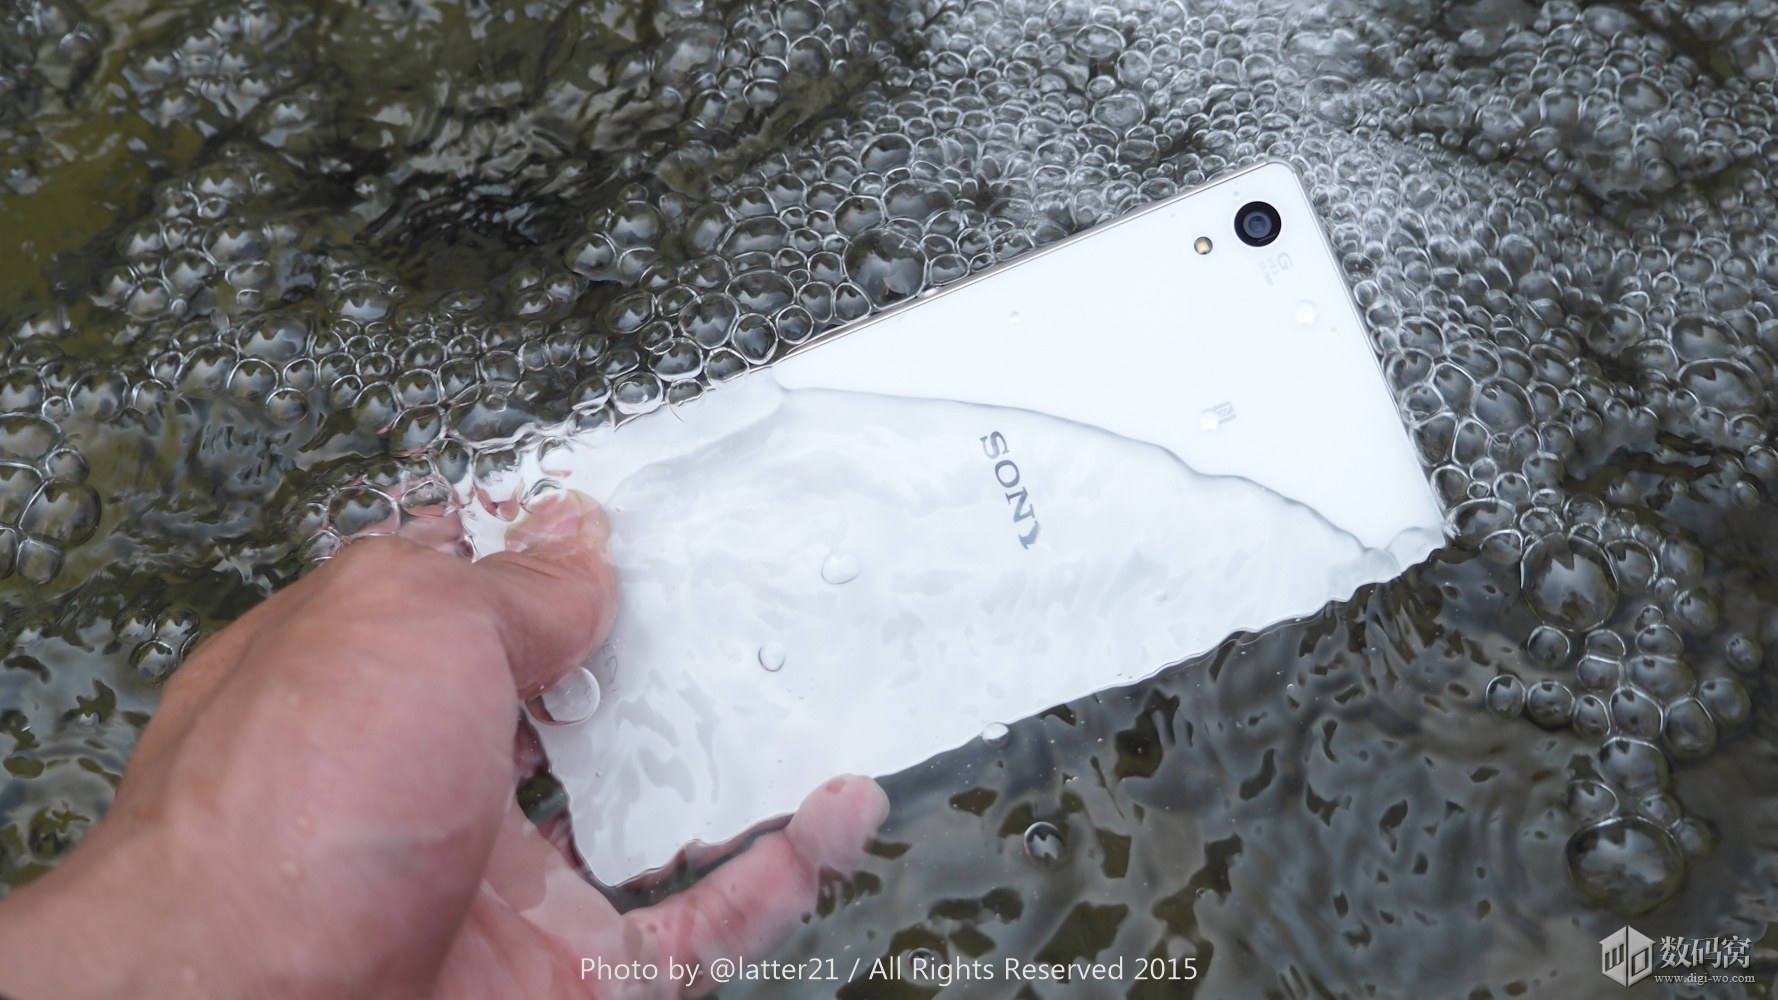 White Xperia Z3+ Water Resistant